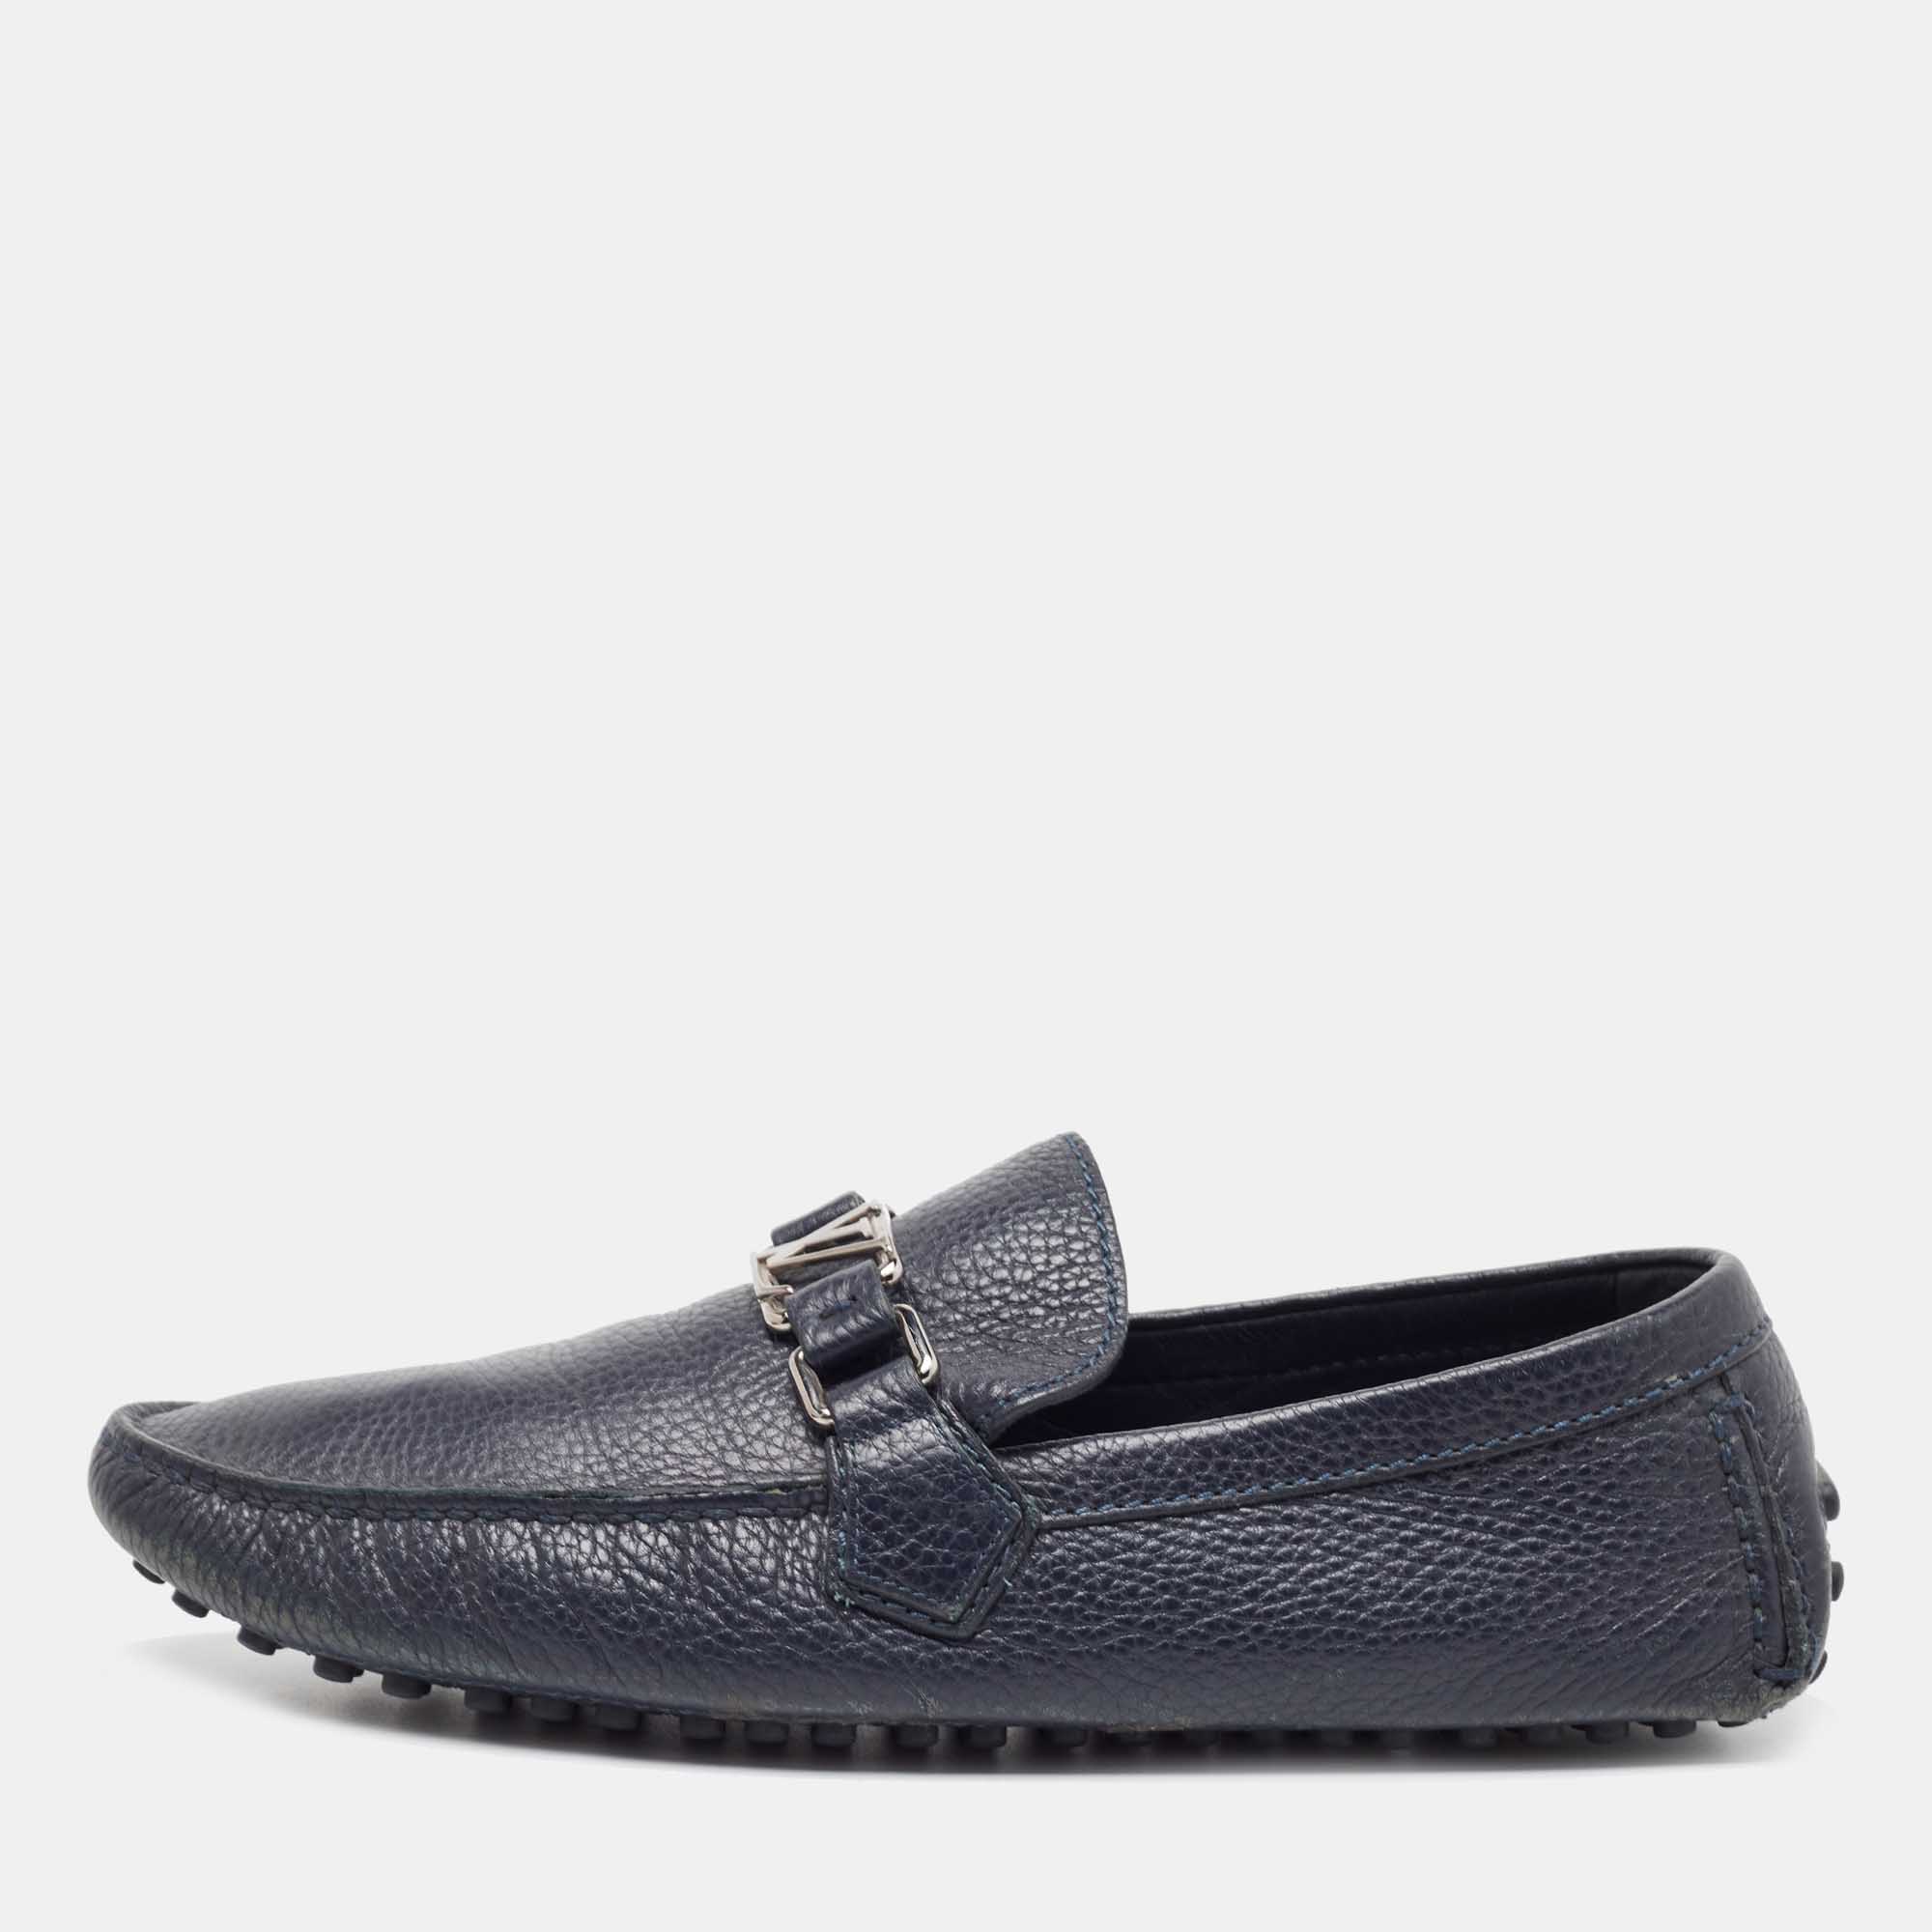 Louis vuitton navy blue leather hockenheim loafers size 42